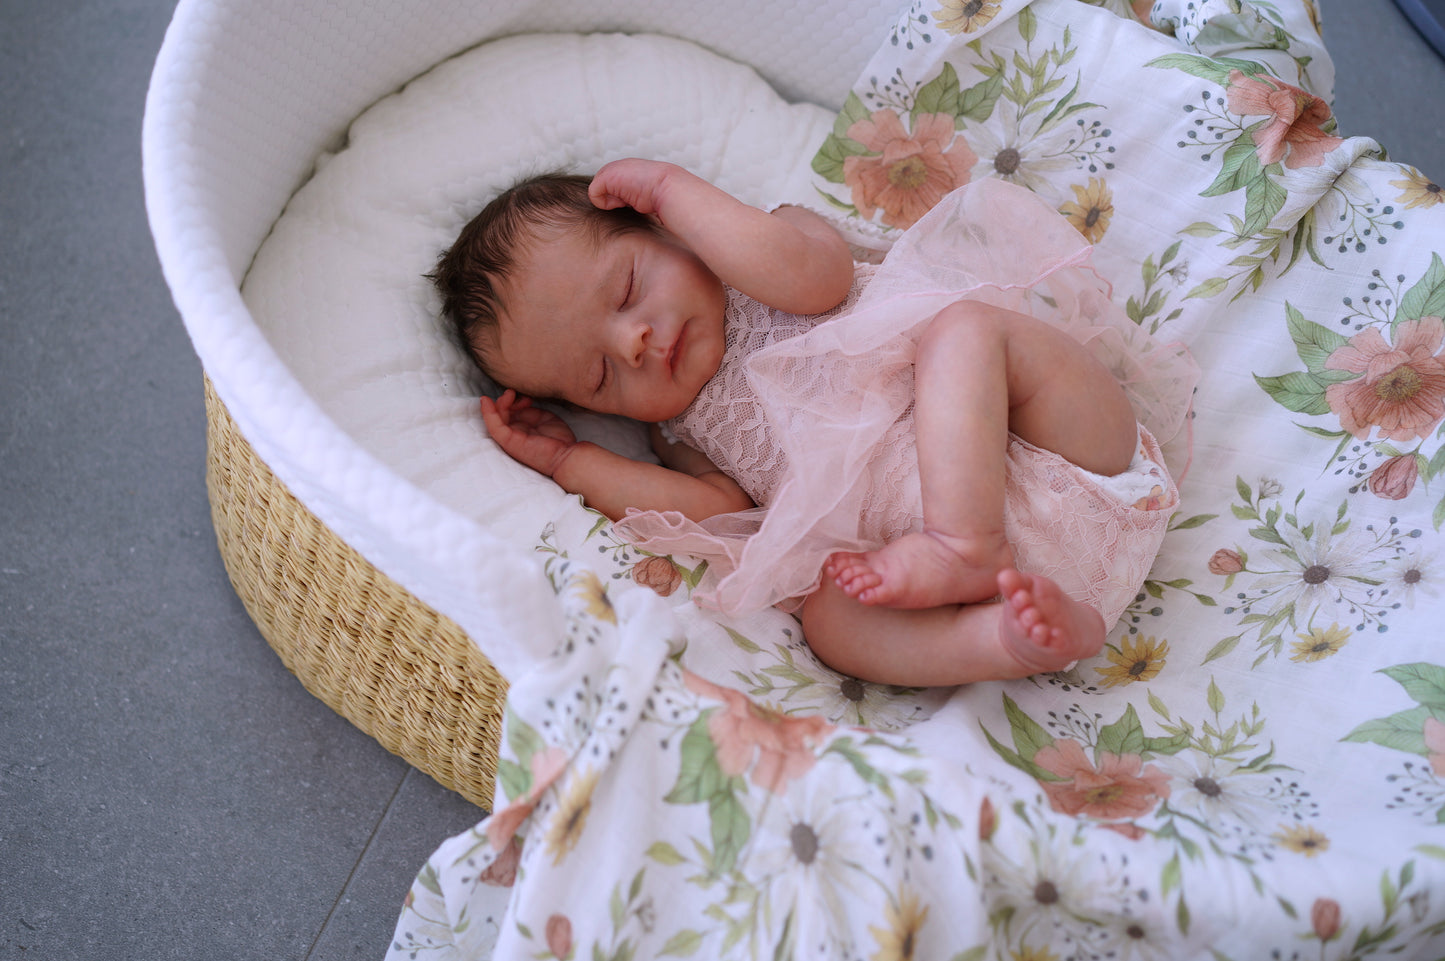 Baby Erica - Prototipo de Joanna Kazmierczak-Pietka, Reborn de Alexa Calvo